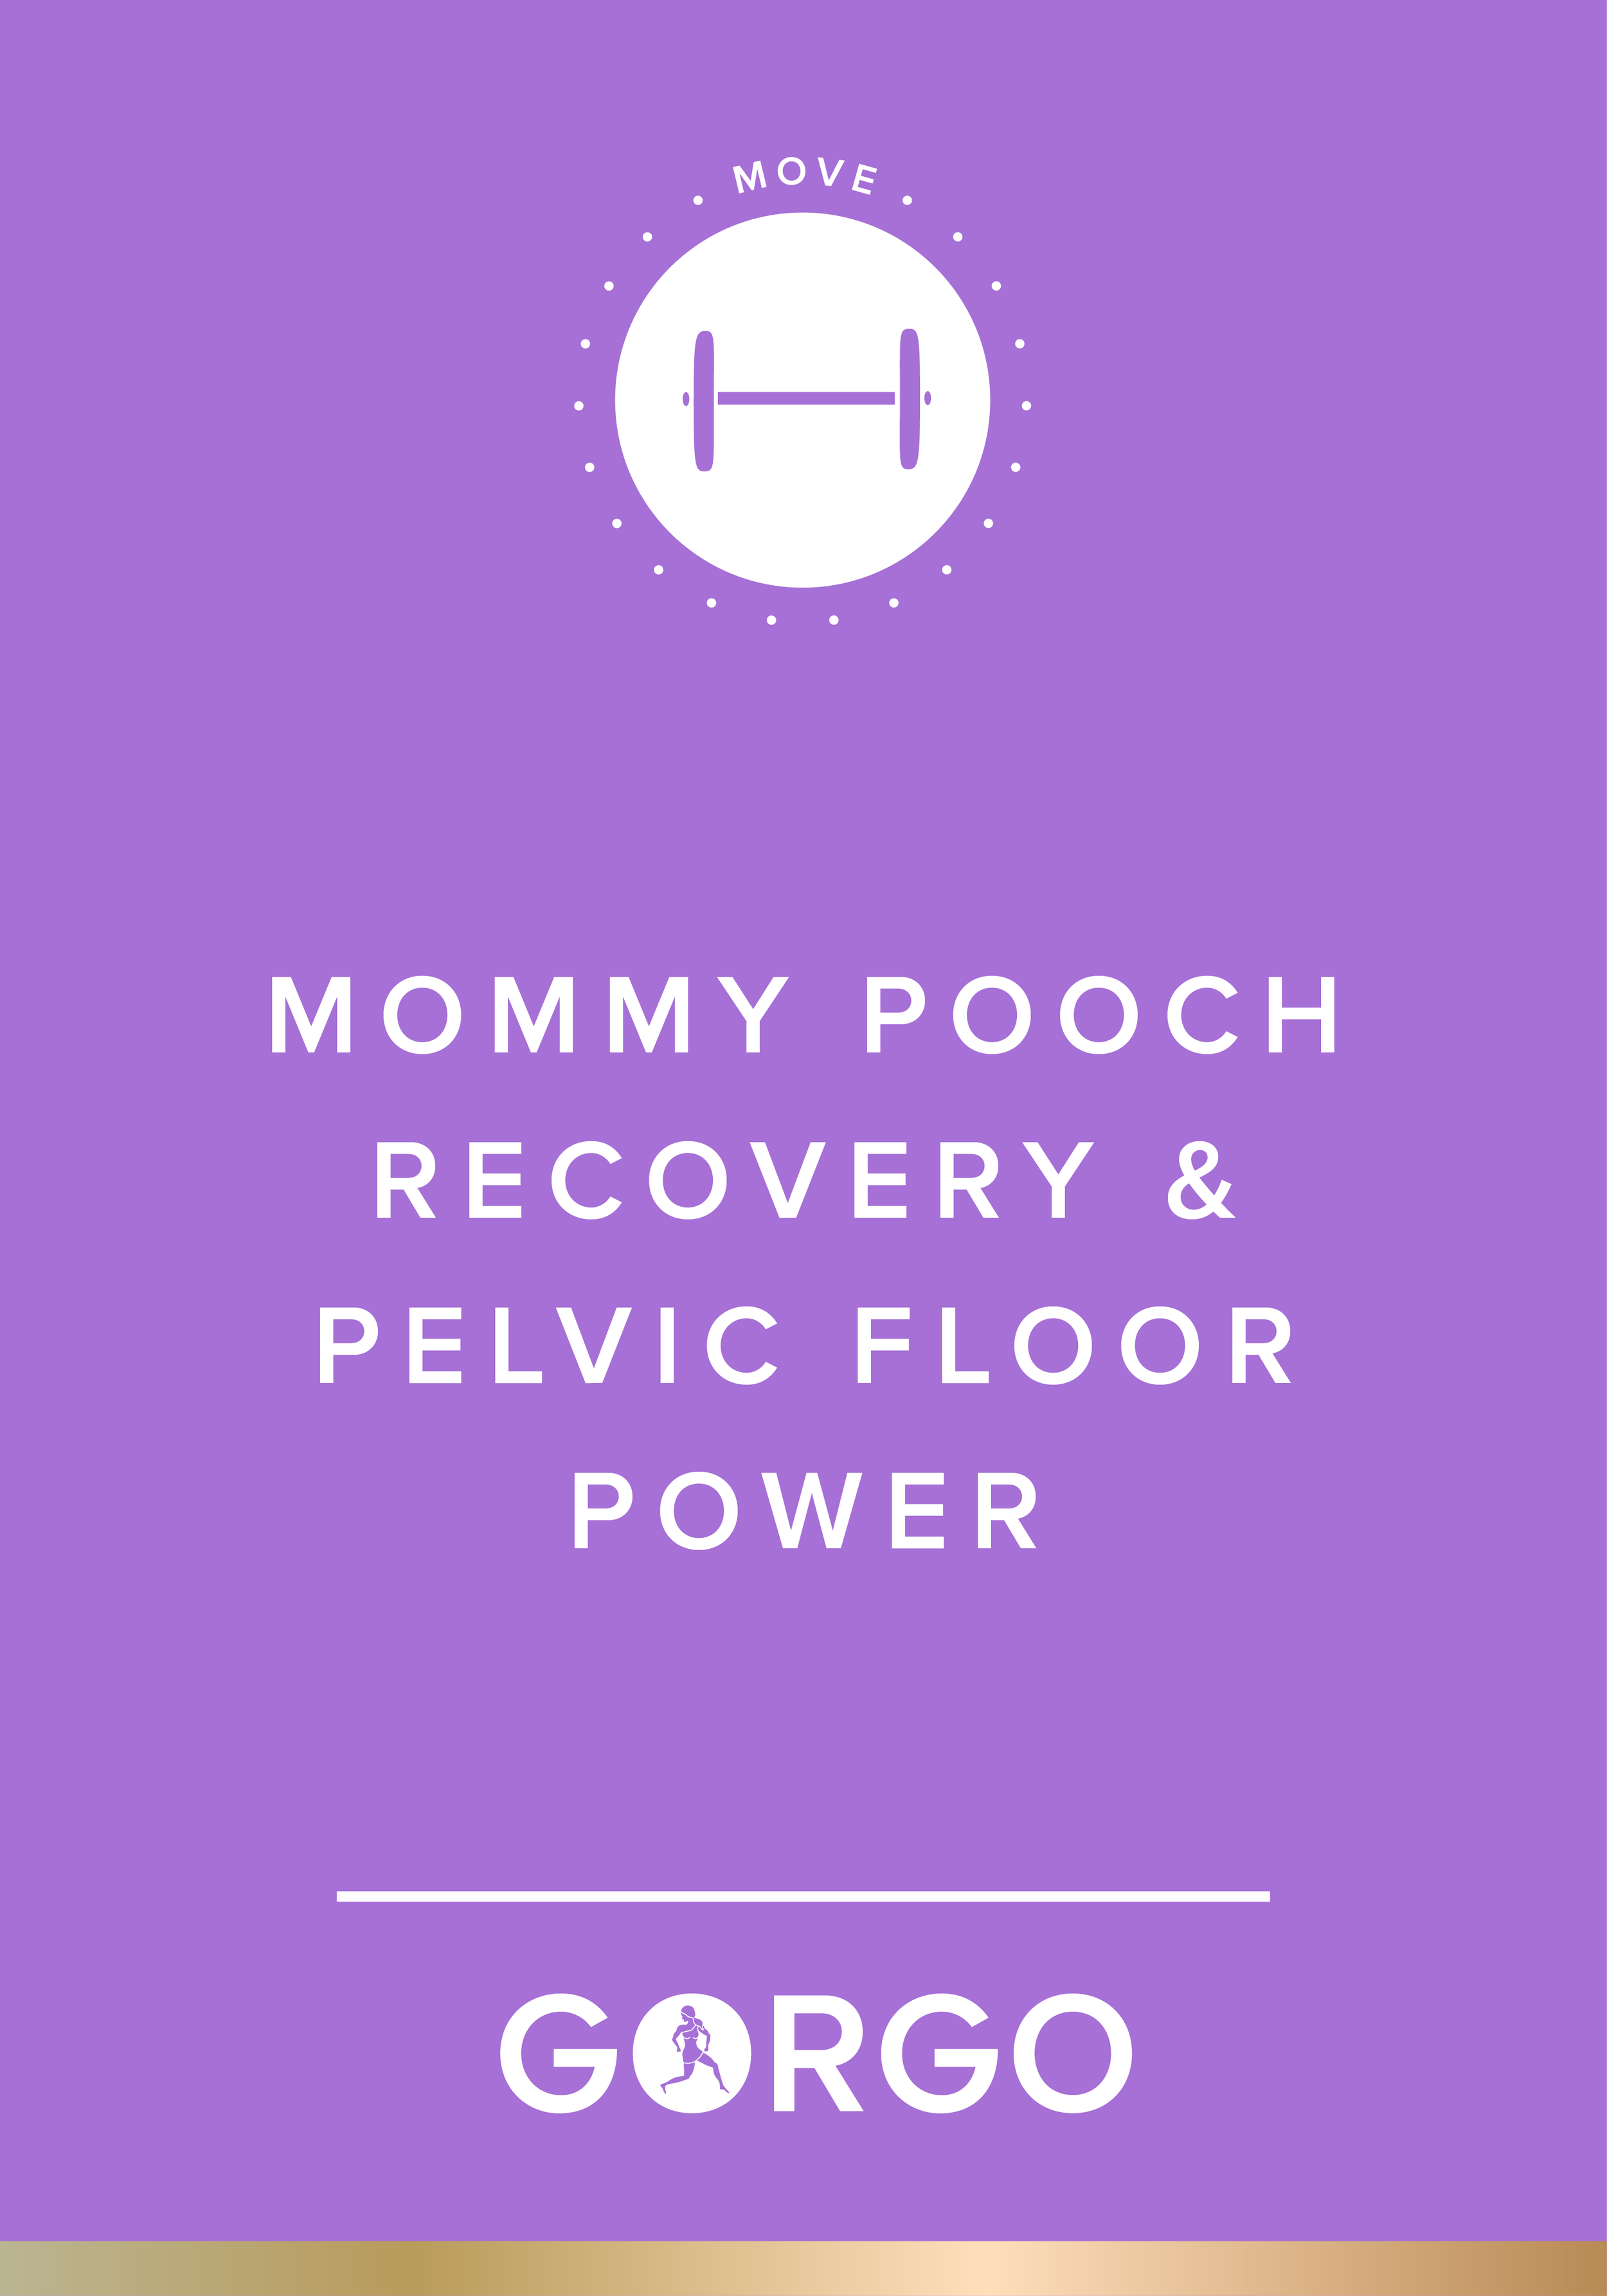 Mommy Pooch Recovery & Pelvic Floor Power — GORGO